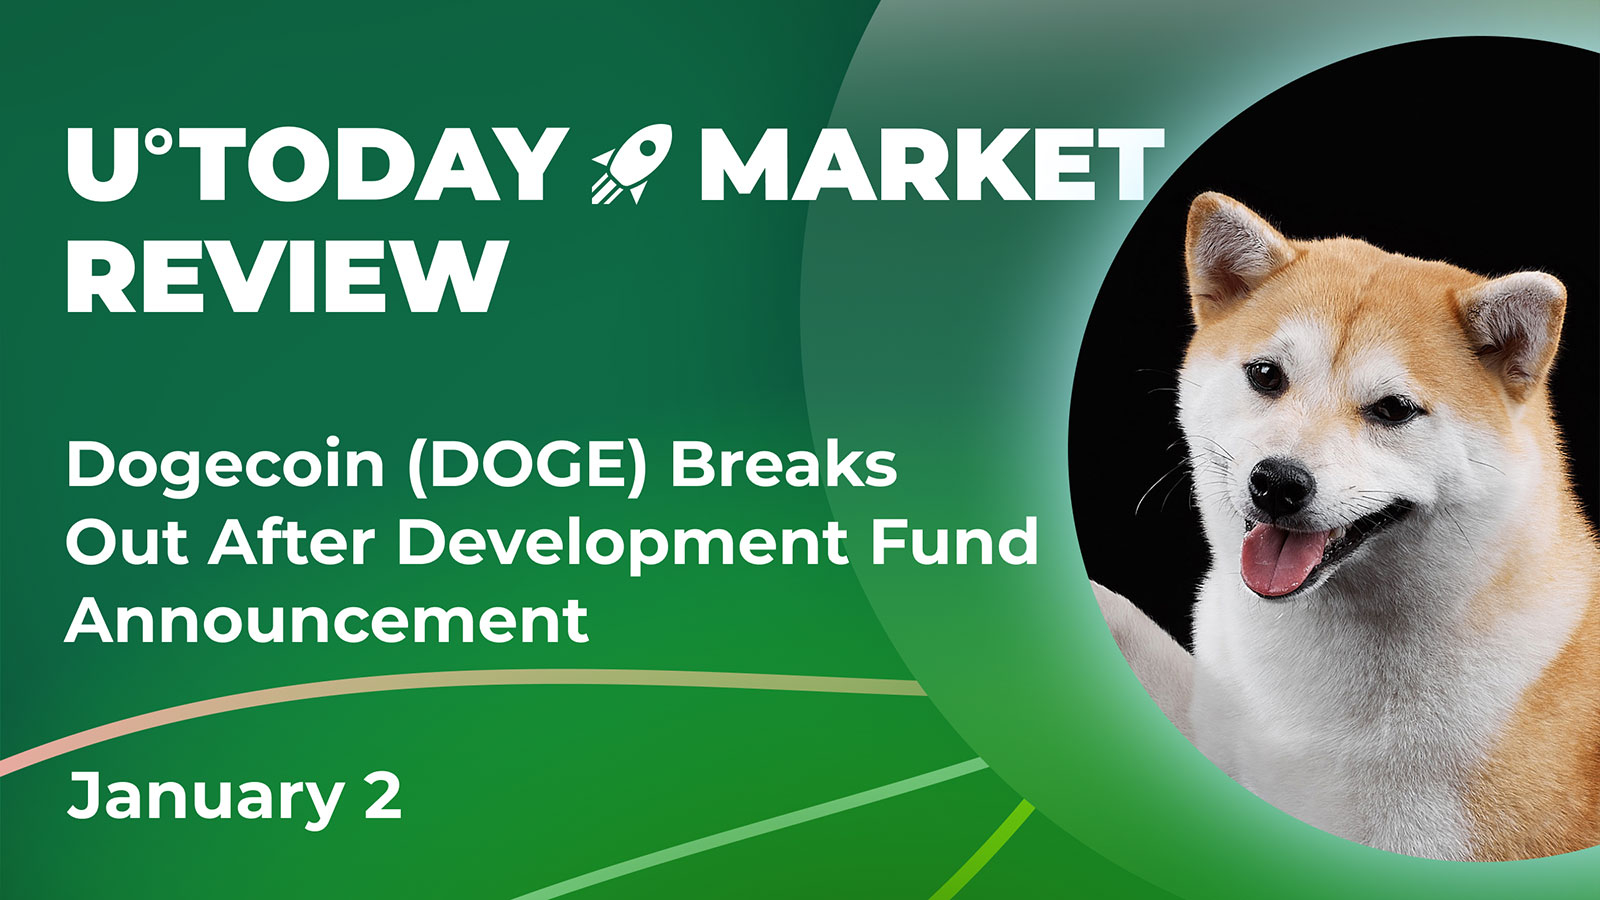 Dogecoin (DOGE) پس از اعلام صندوق توسعه منتشر شد: بررسی بازار کریپتو، 2 ژانویه